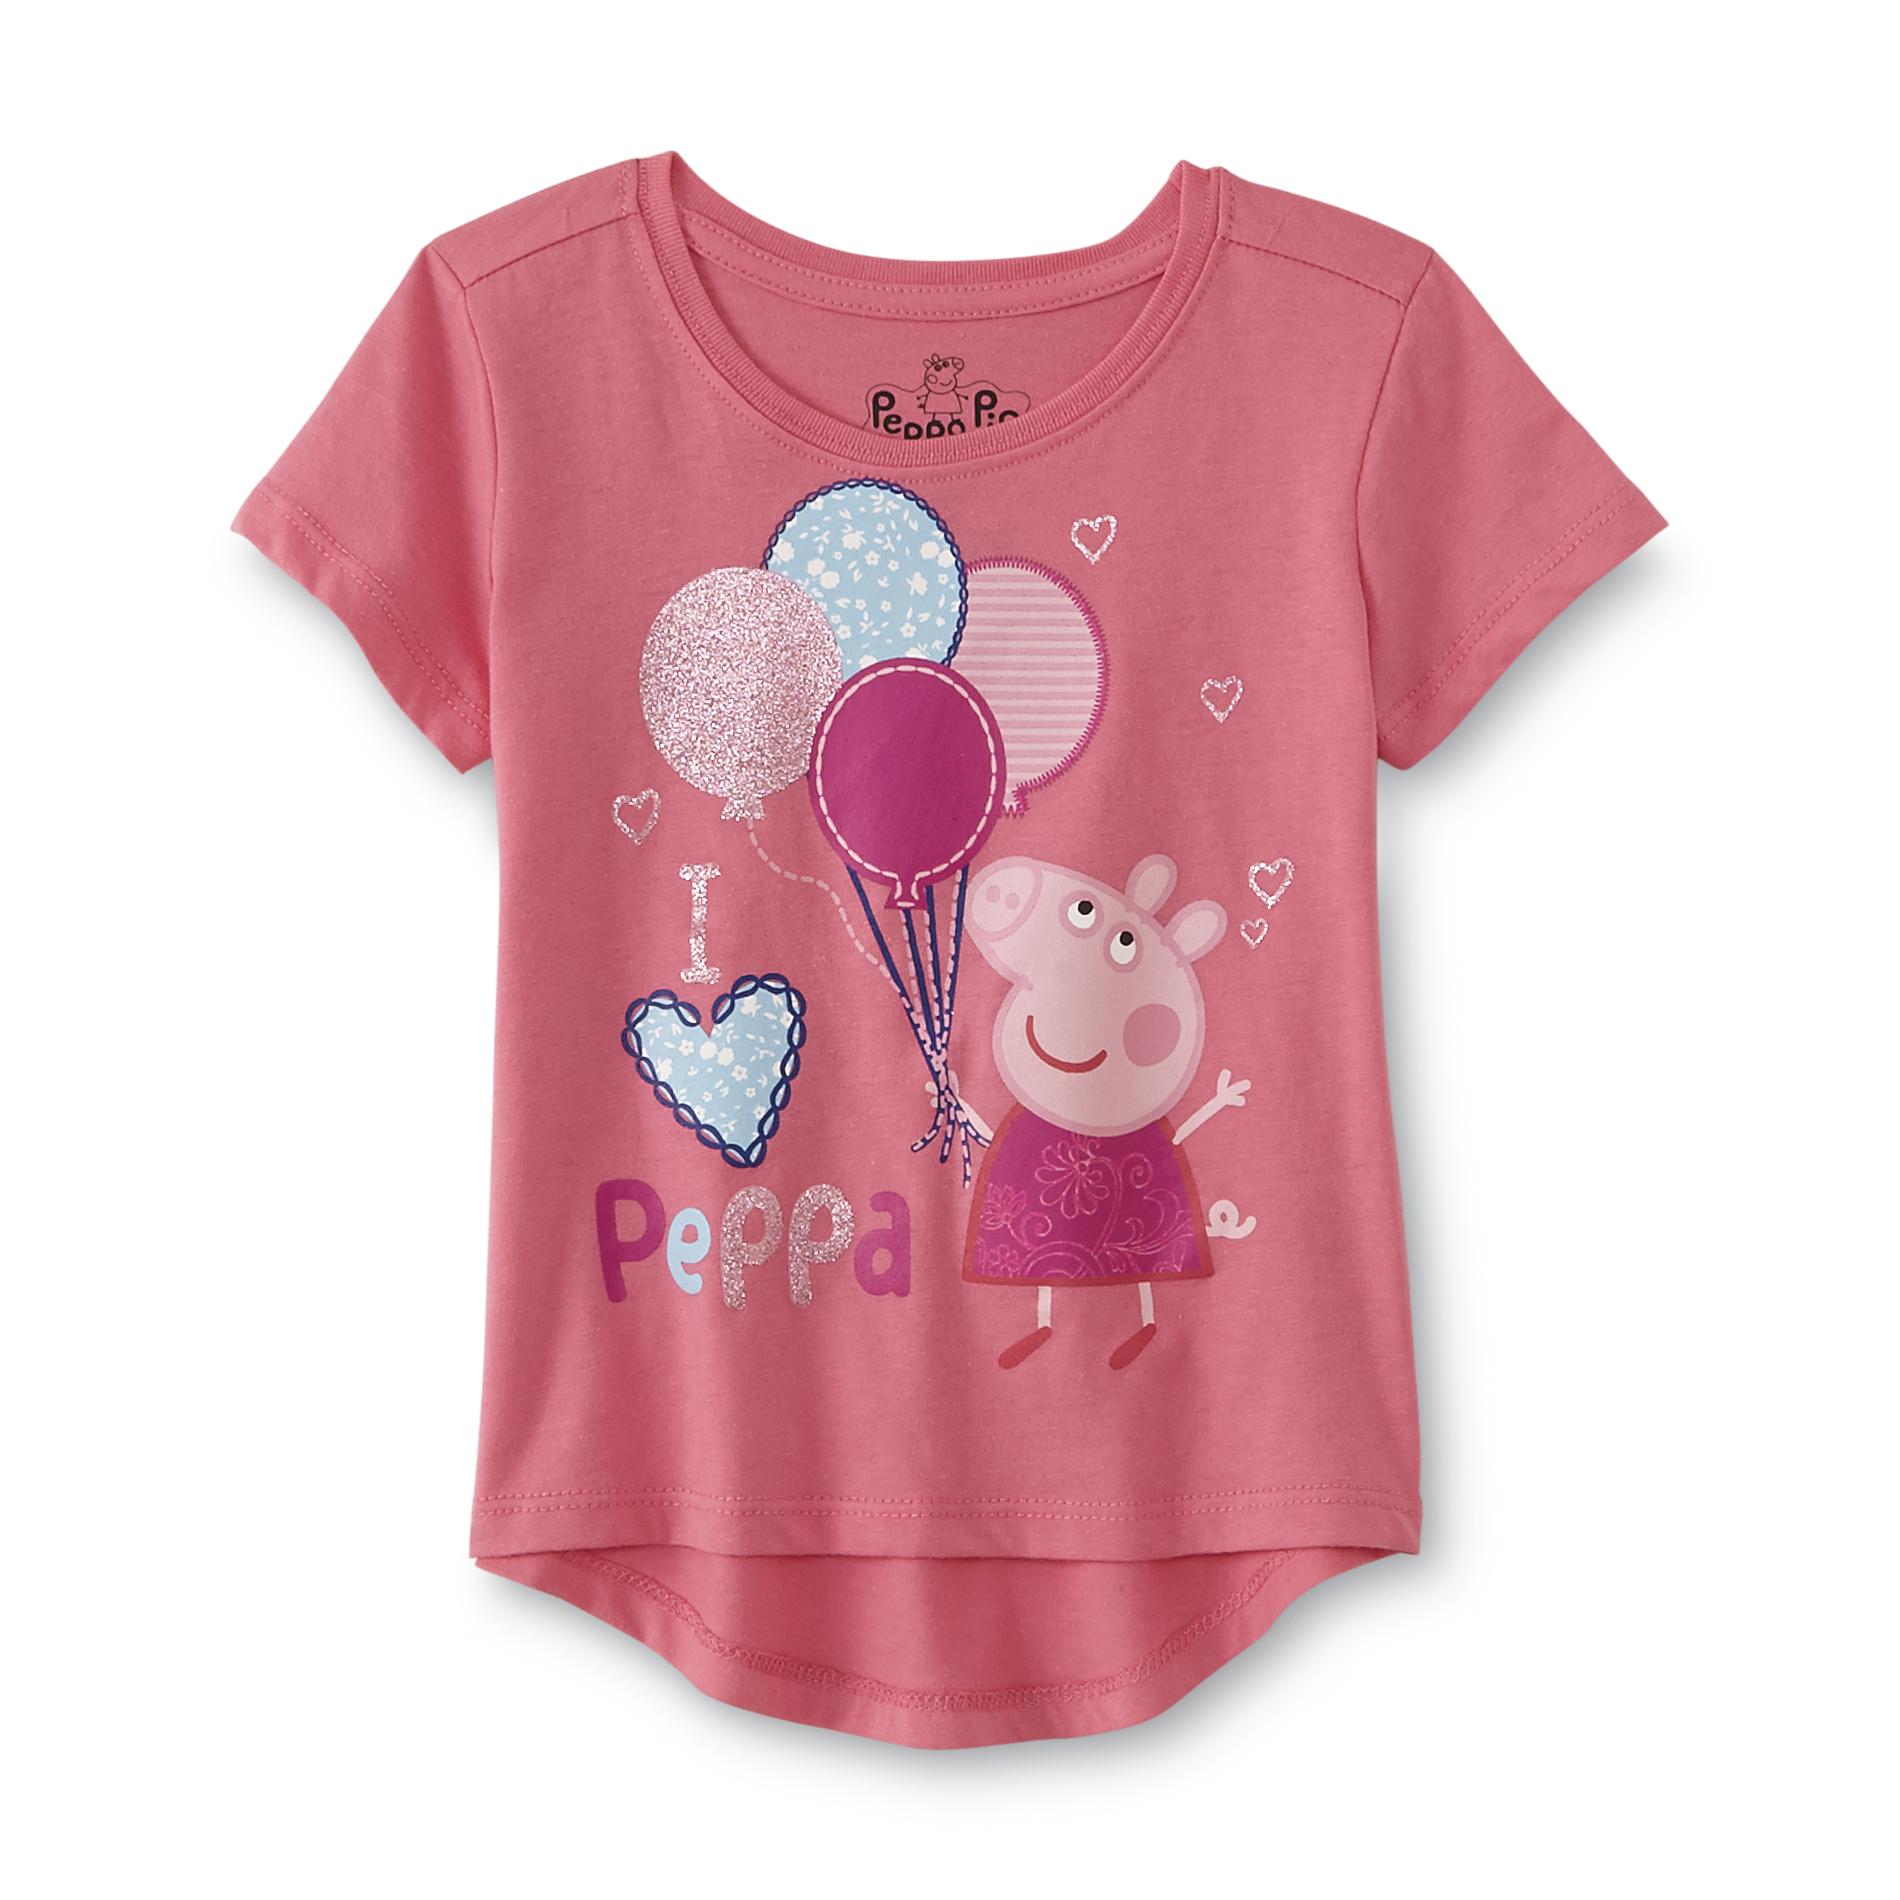 Peppa Pig Toddler Girl's High-Low Top